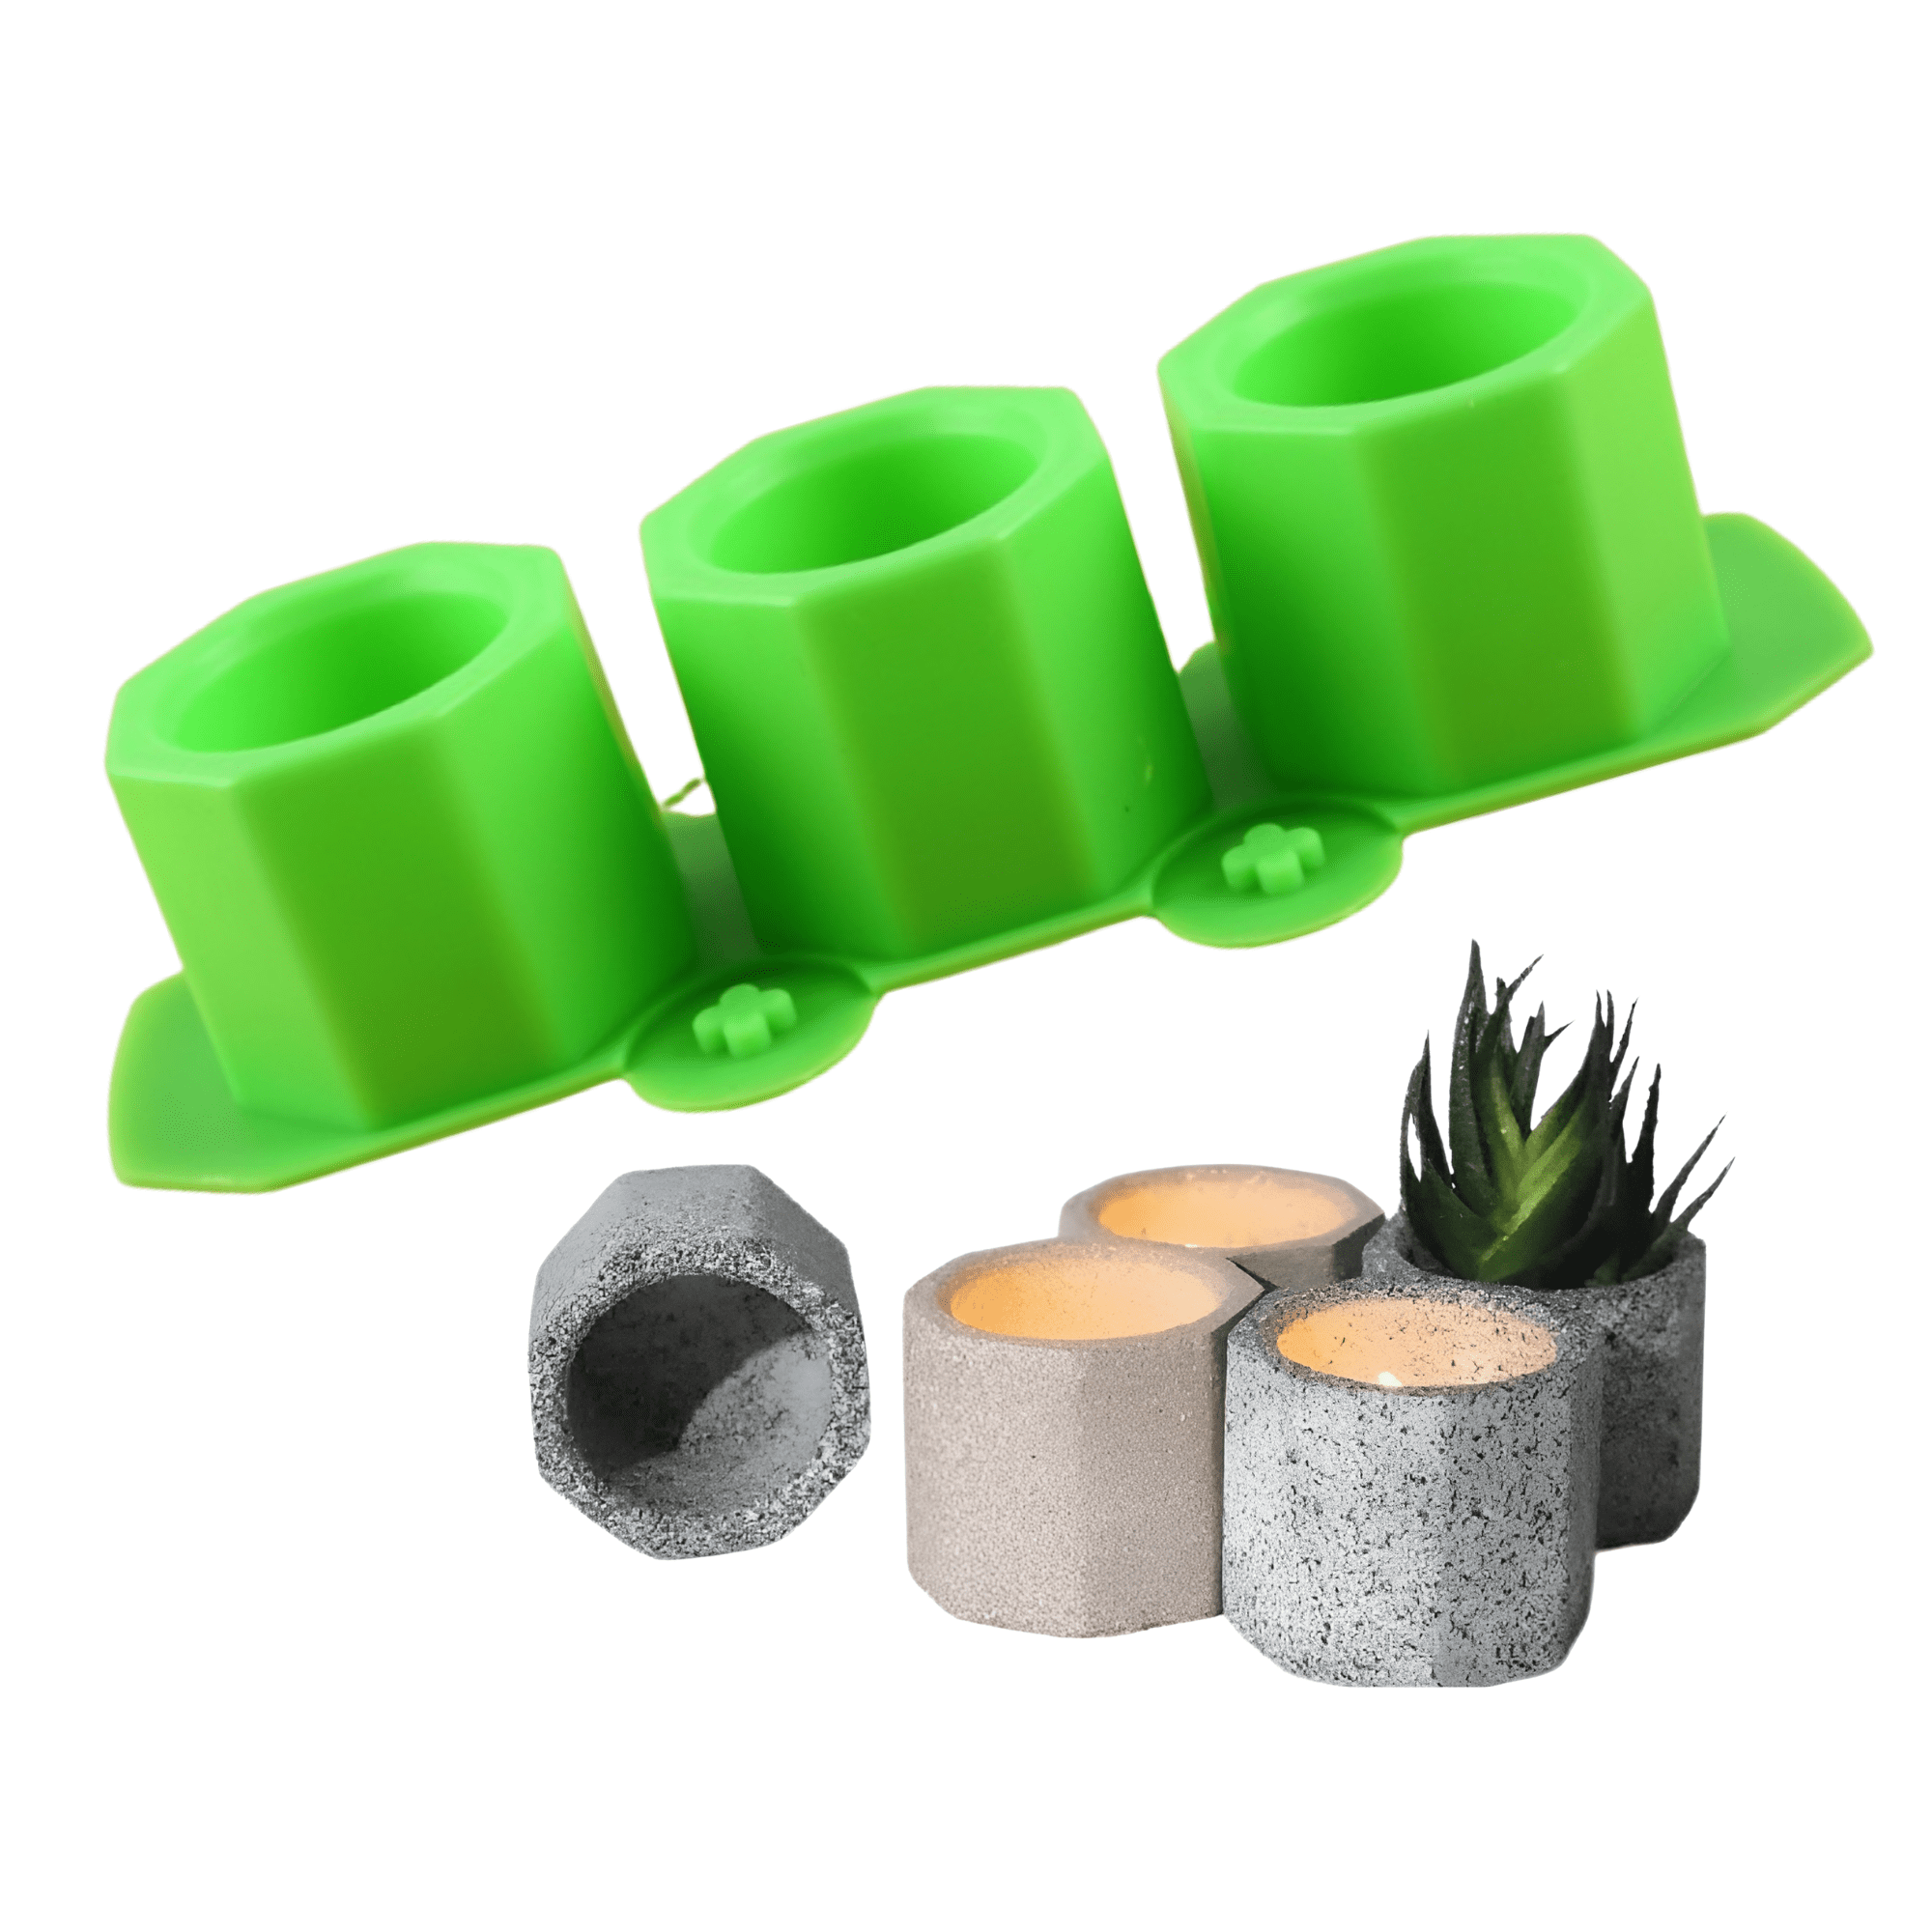 Molde de silicona para macetas y decoración de yeso cemento, resina, concreto. plantillas de figura para maceta (Hexagonal verde ) ecomlab molde maceta